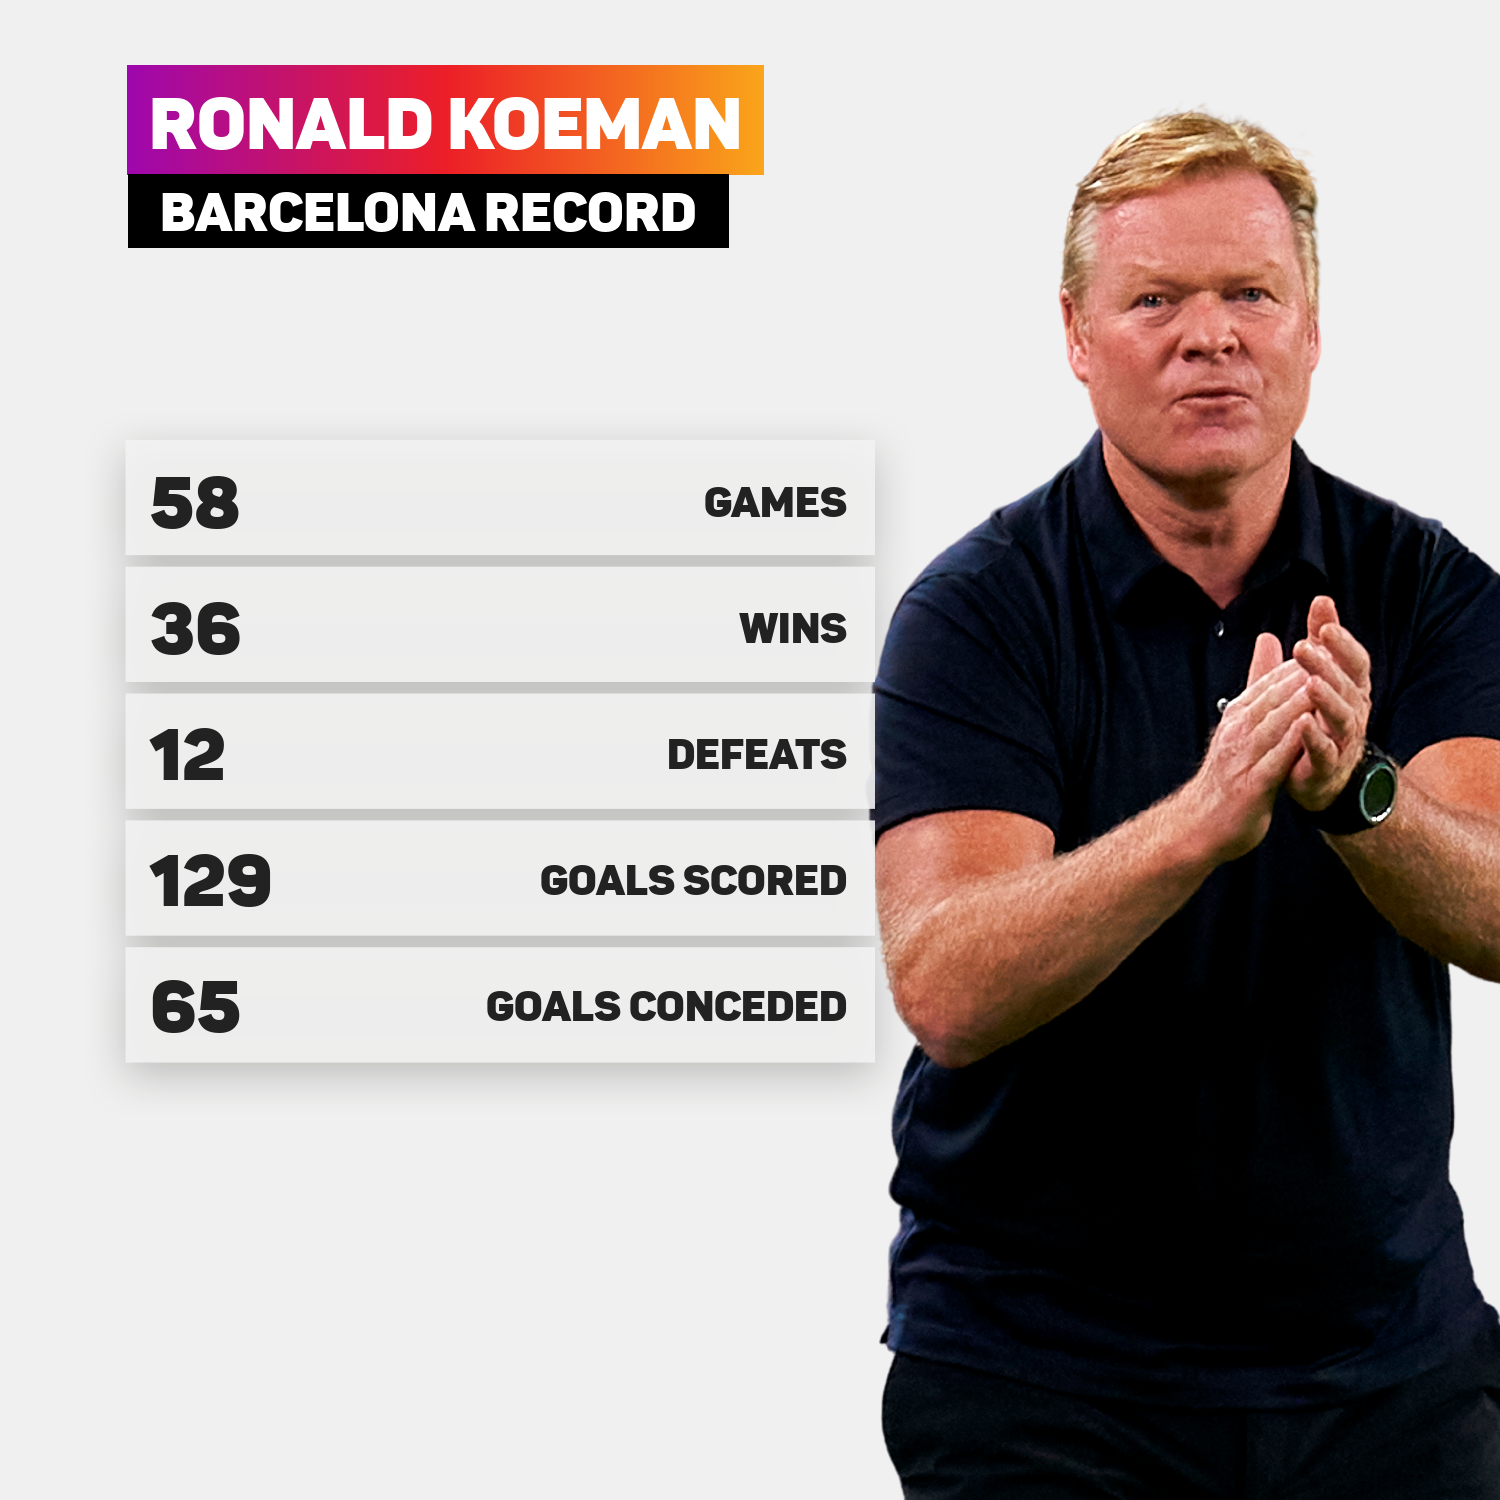 Ronald Koeman's Barcelona record